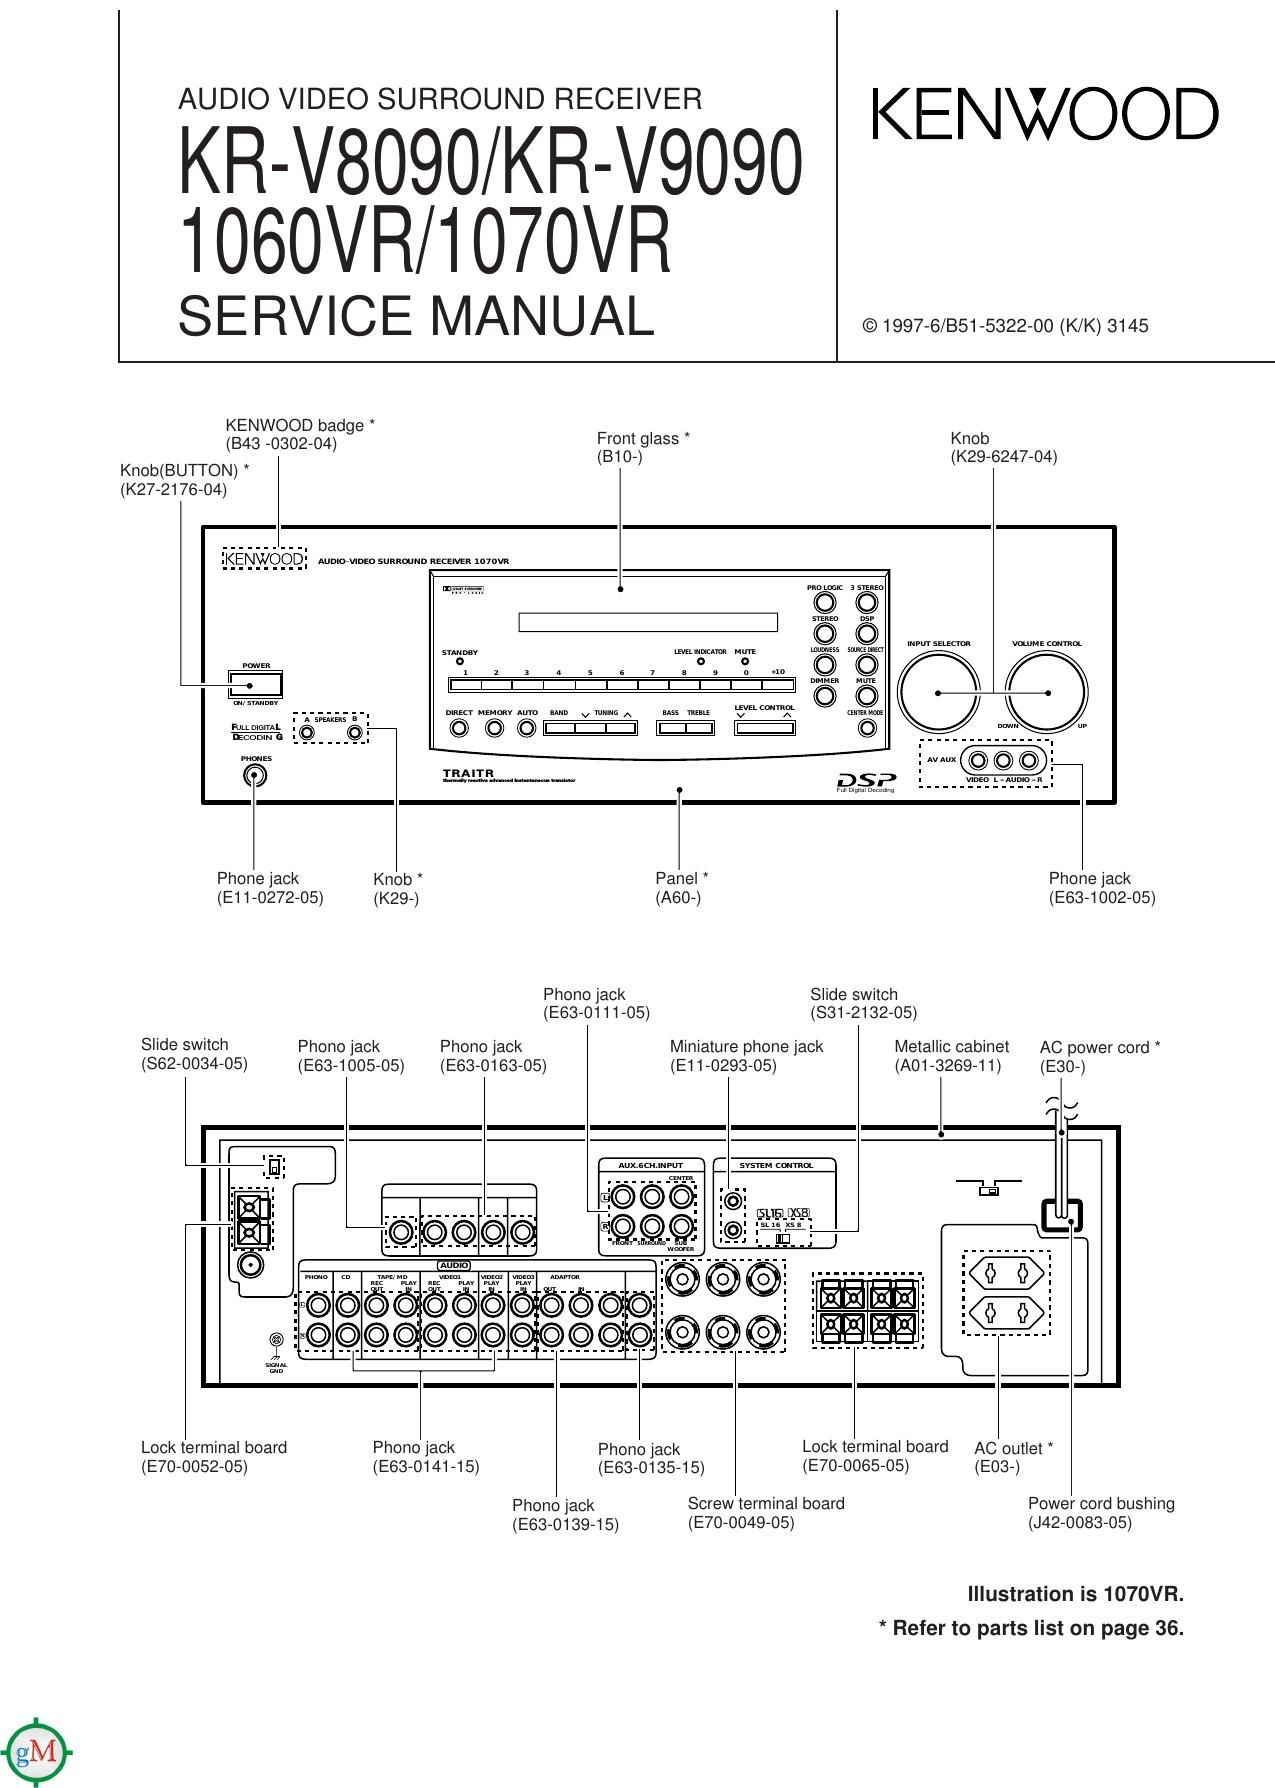 Kenwood 1060 VR Service Manual